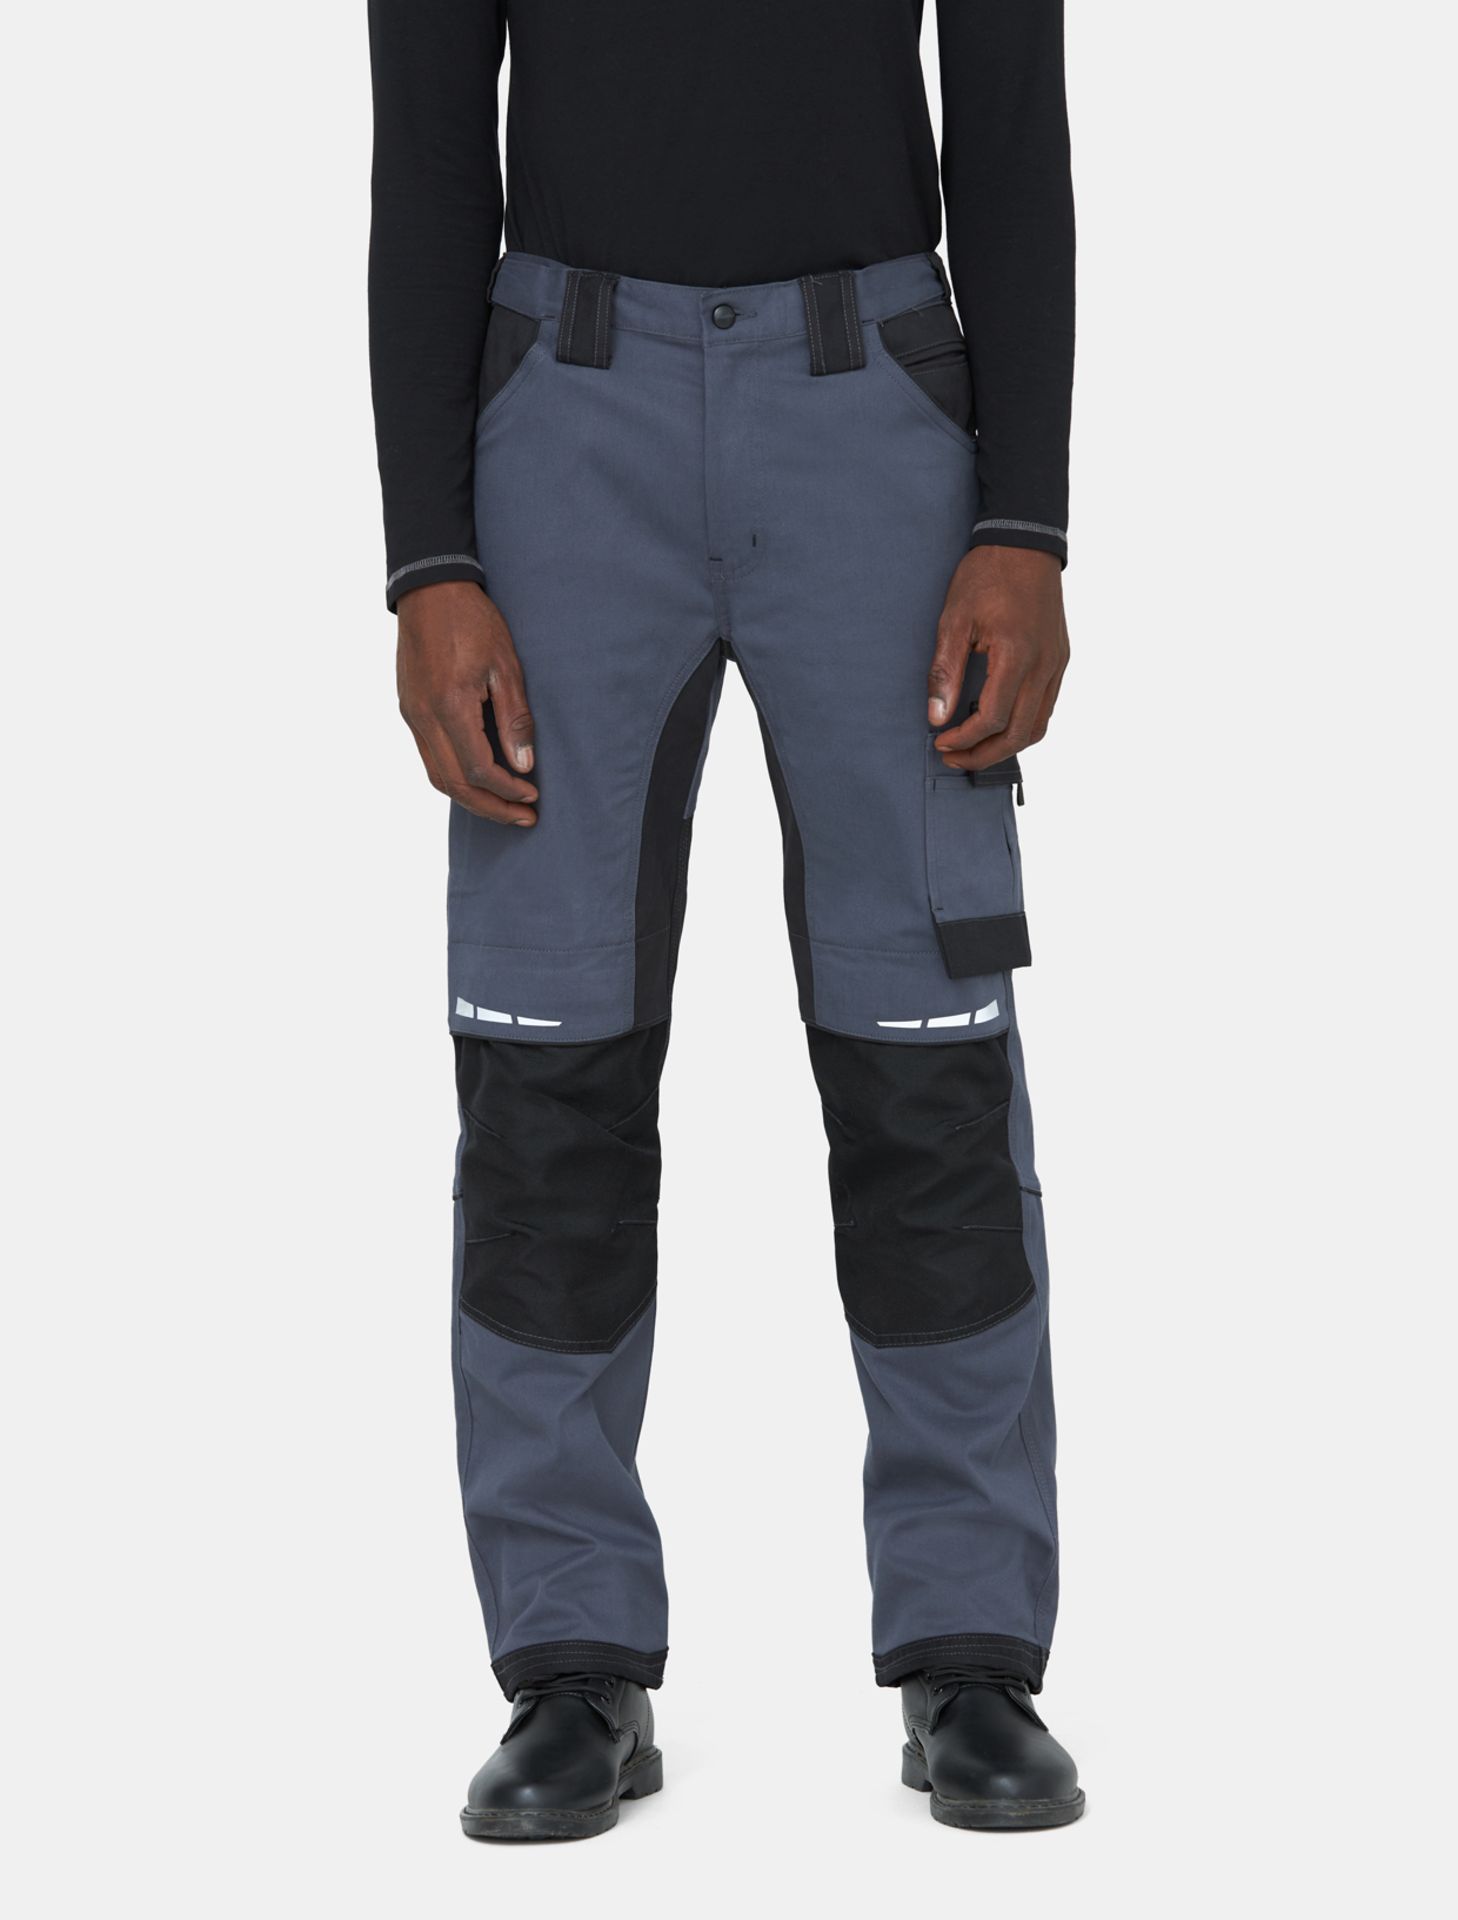 Brand New Dickies GDT Premium Workwear Trousers - Grey/Black (WD4901) 28R - Image 3 of 3